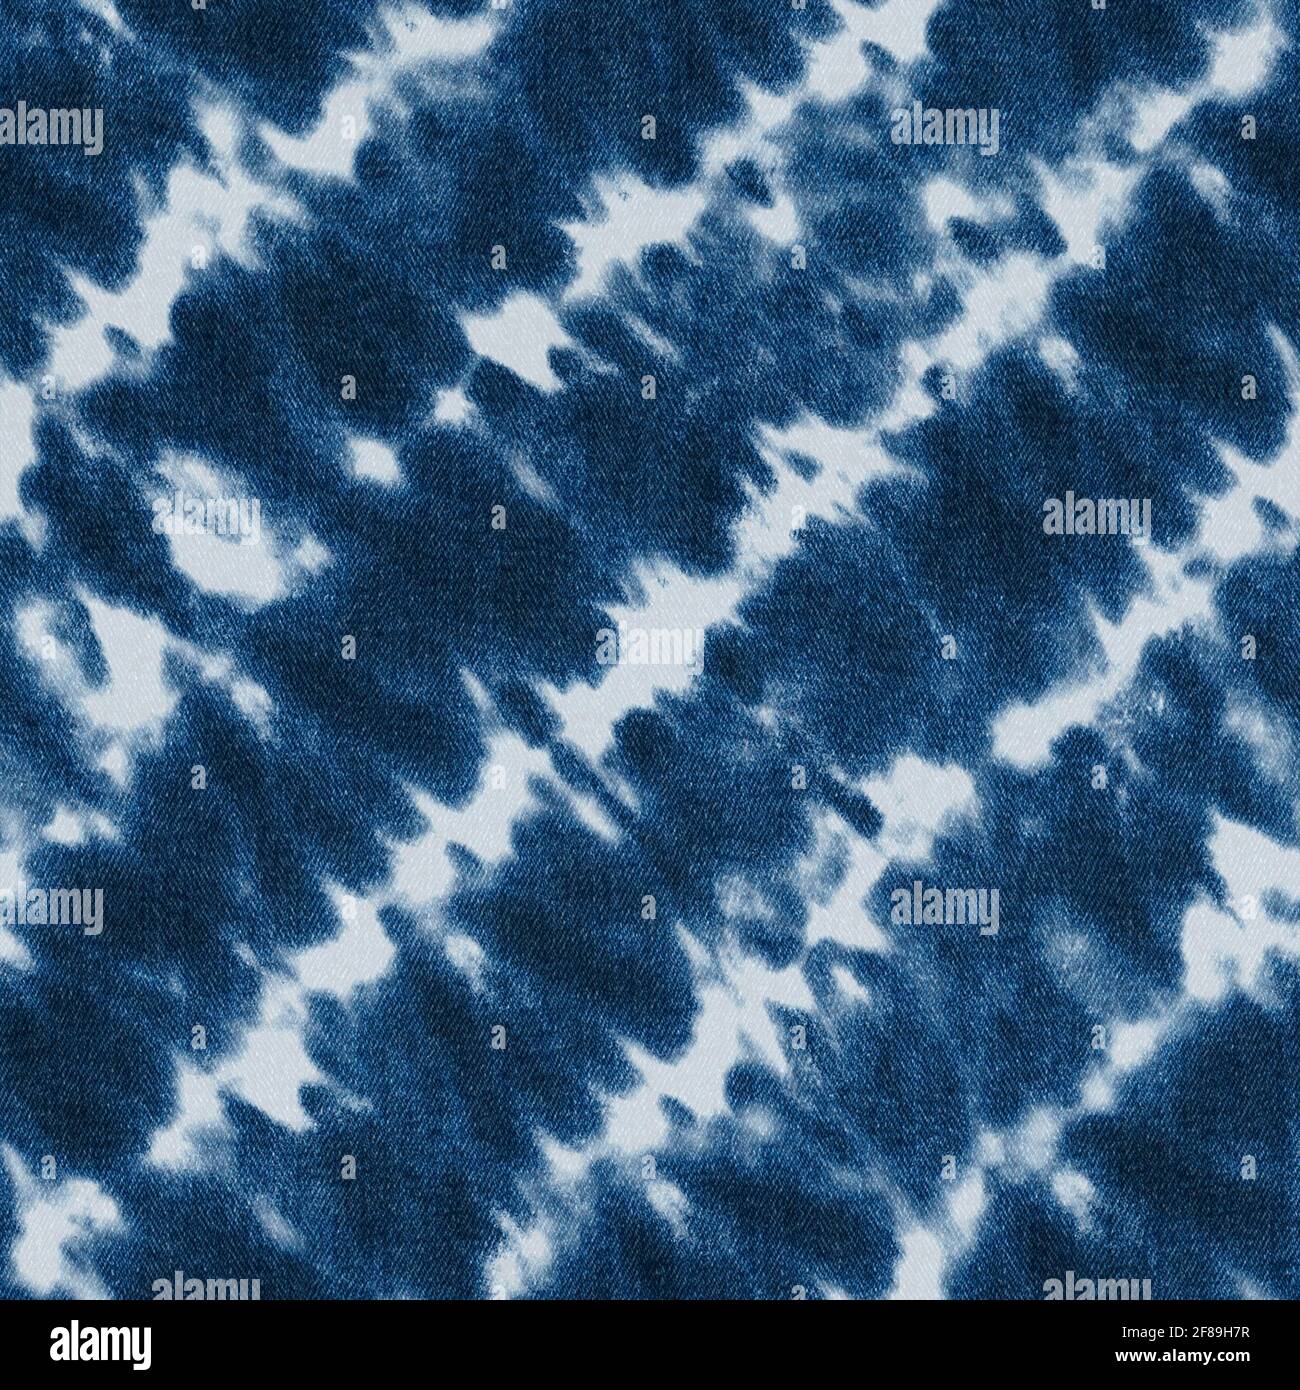 Jeans fashion background. Blue color grunge seamless texture. Textile  cotton textured fabric. Tie dye elements diagonal stripes pattern on denim  mater Stock Photo - Alamy